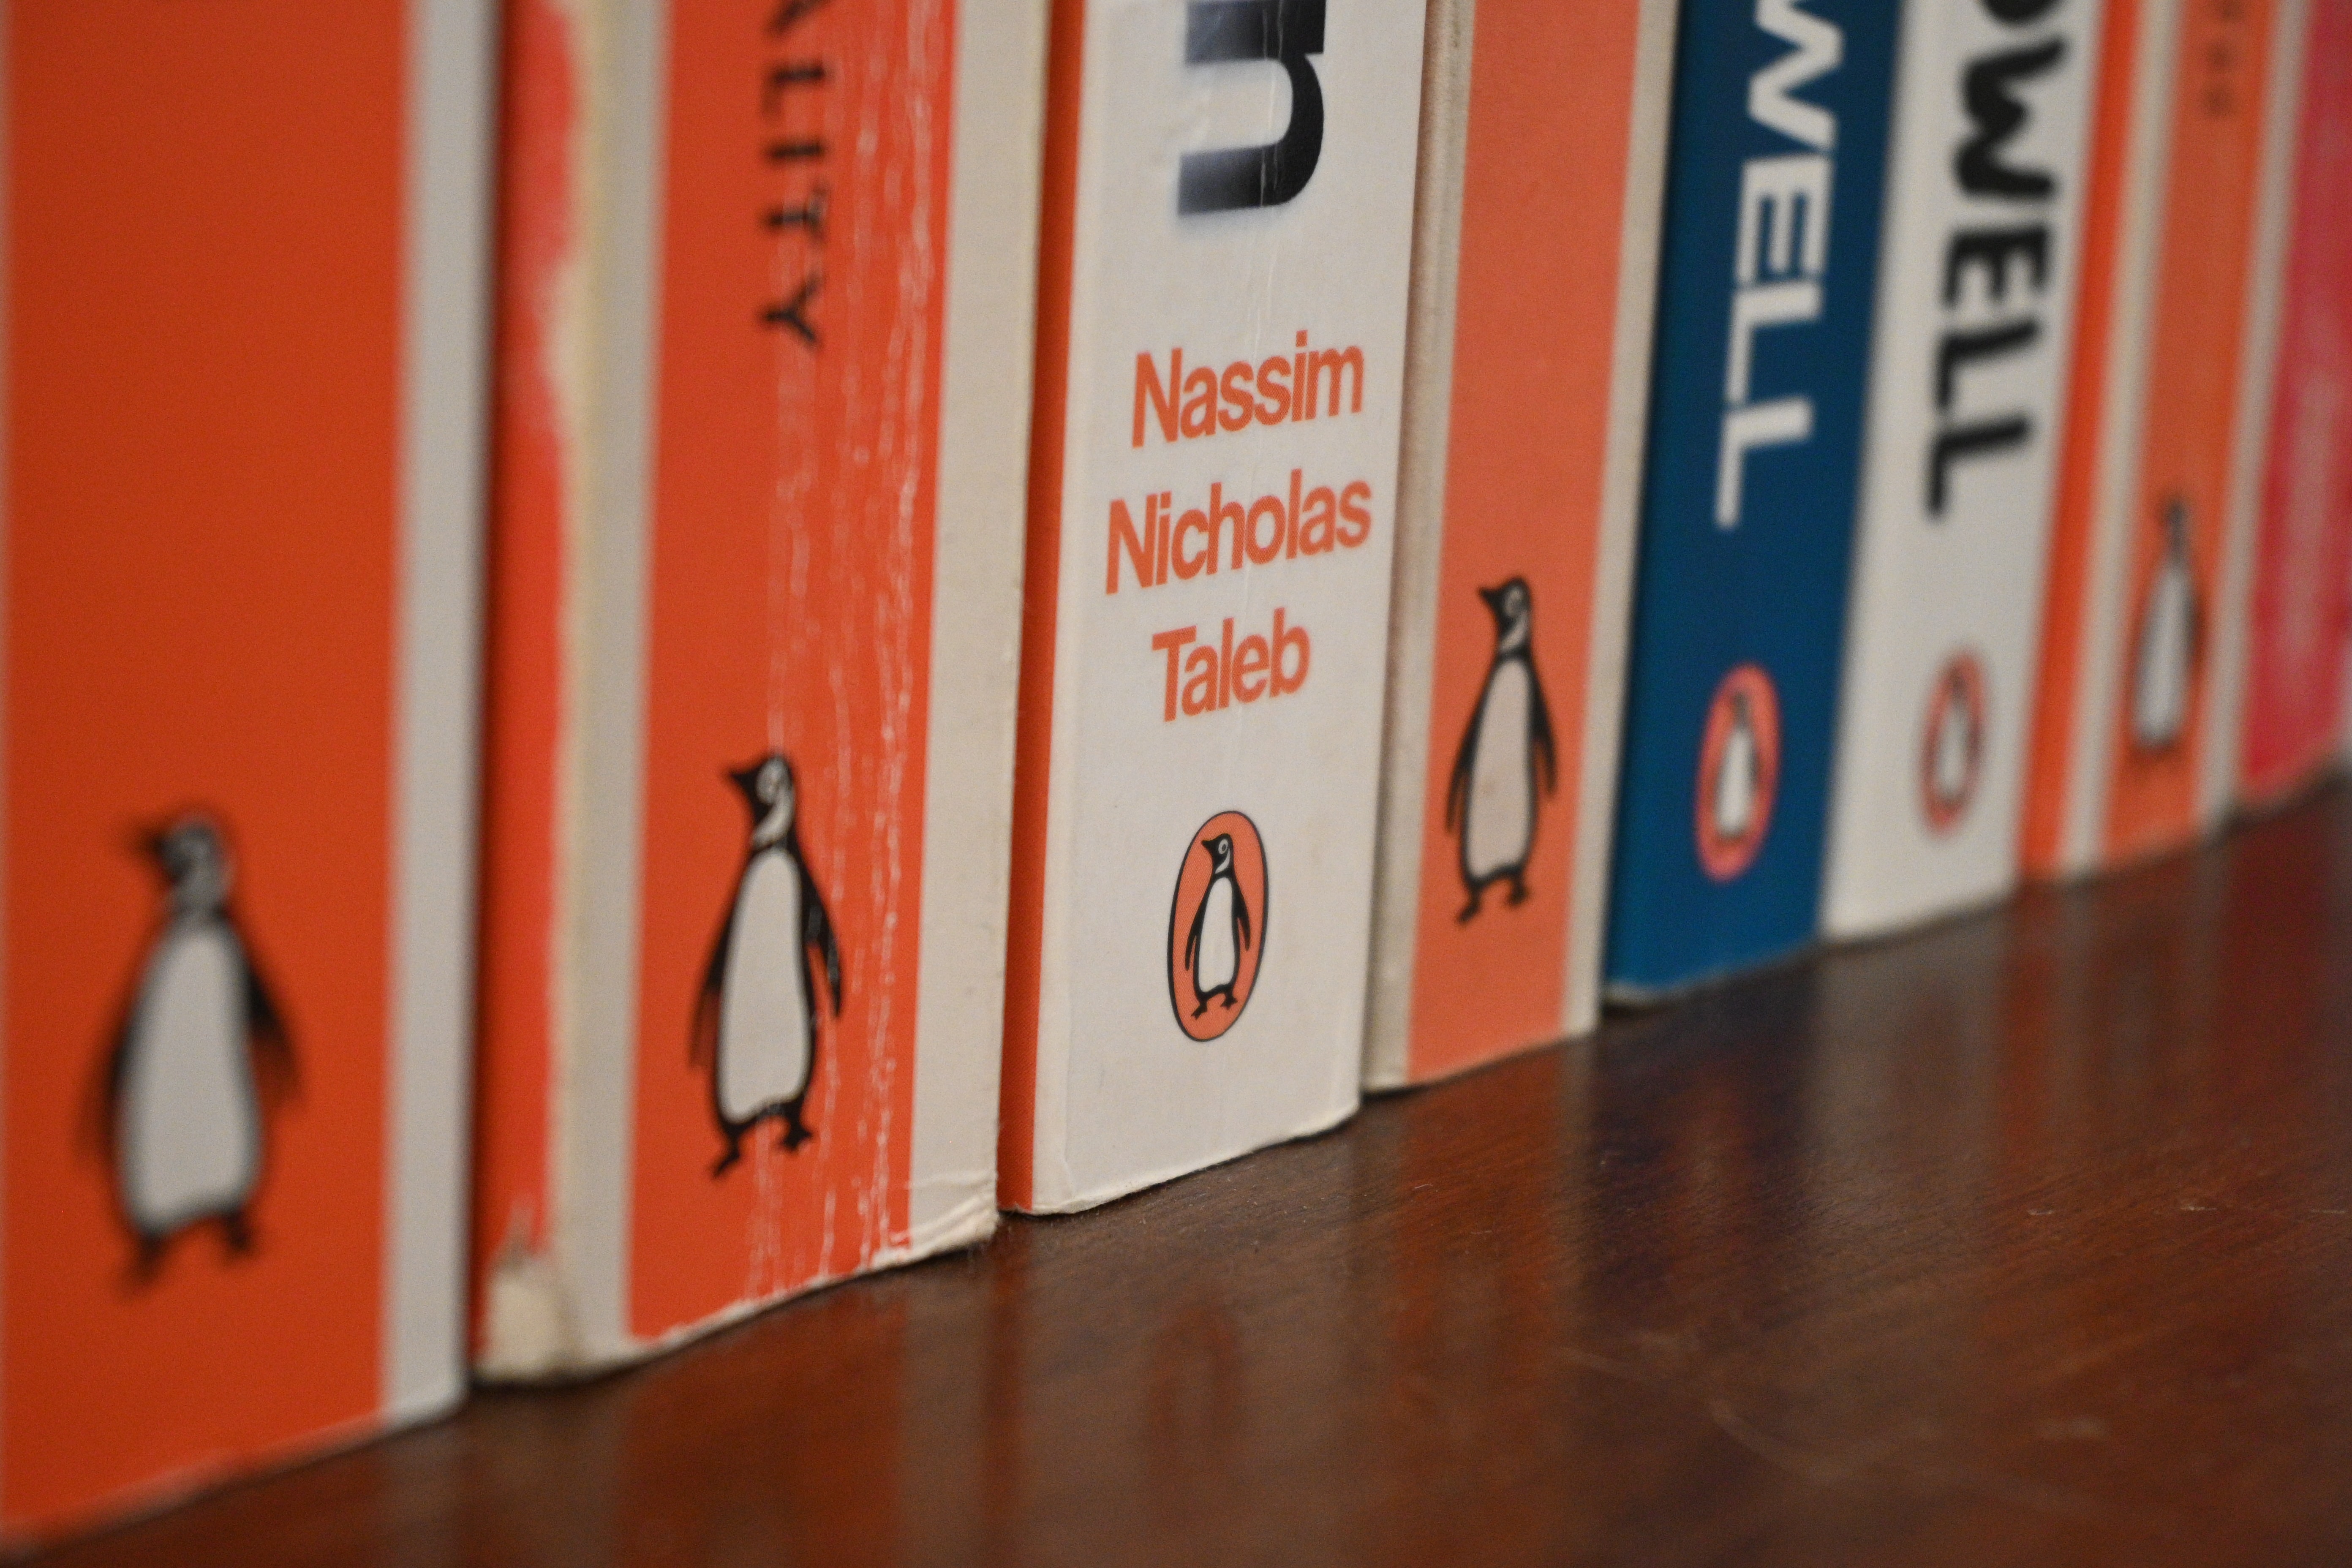 penguin books